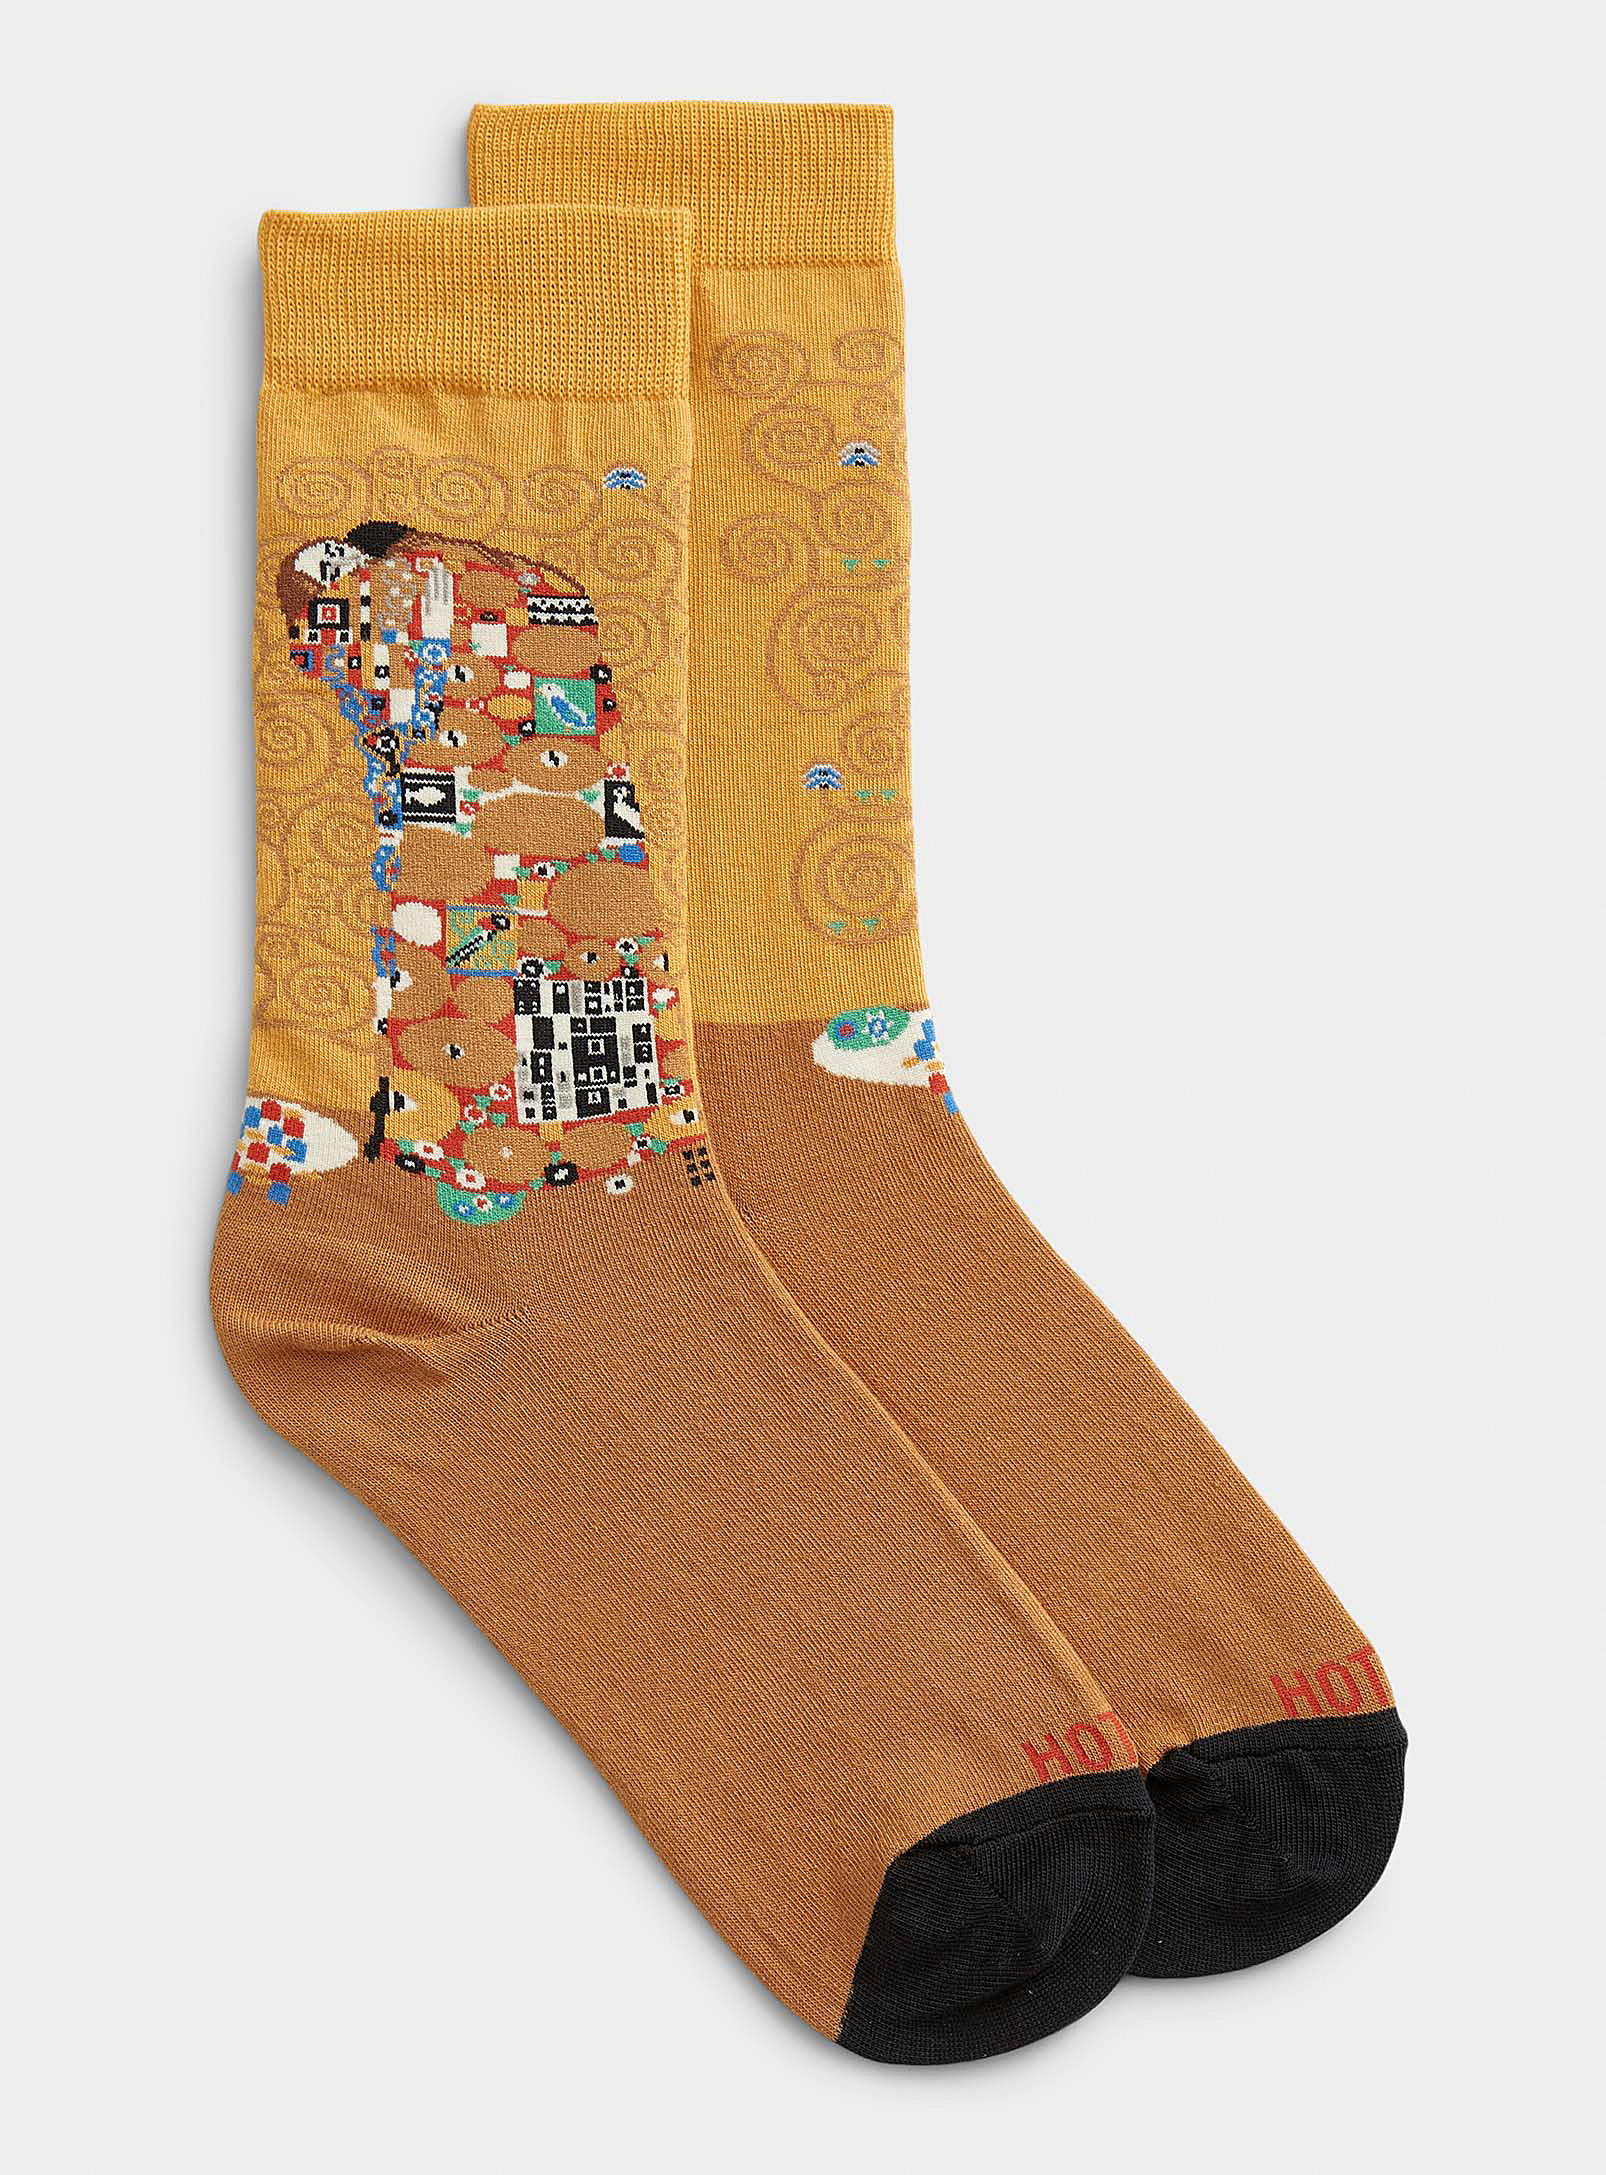 Hot Sox - Women's Gustave Klimt's Fulfillment sock